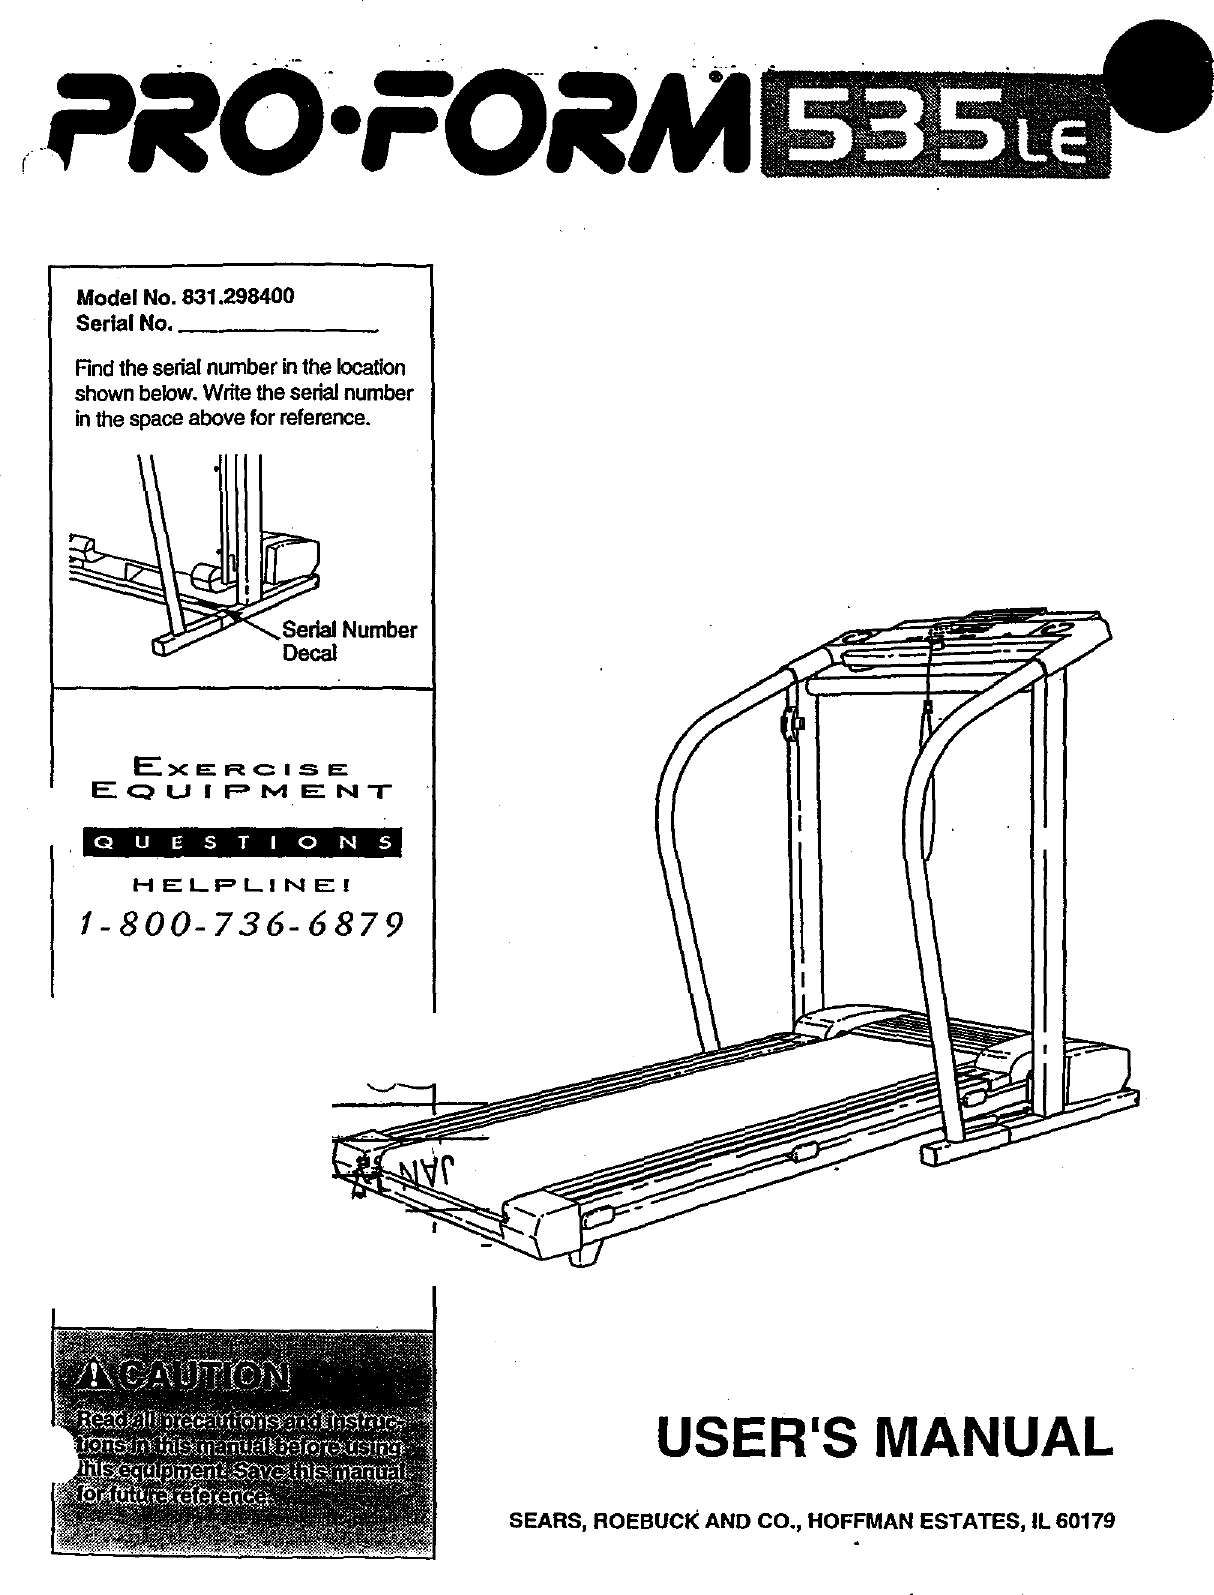 Manual For Proform Treadmill